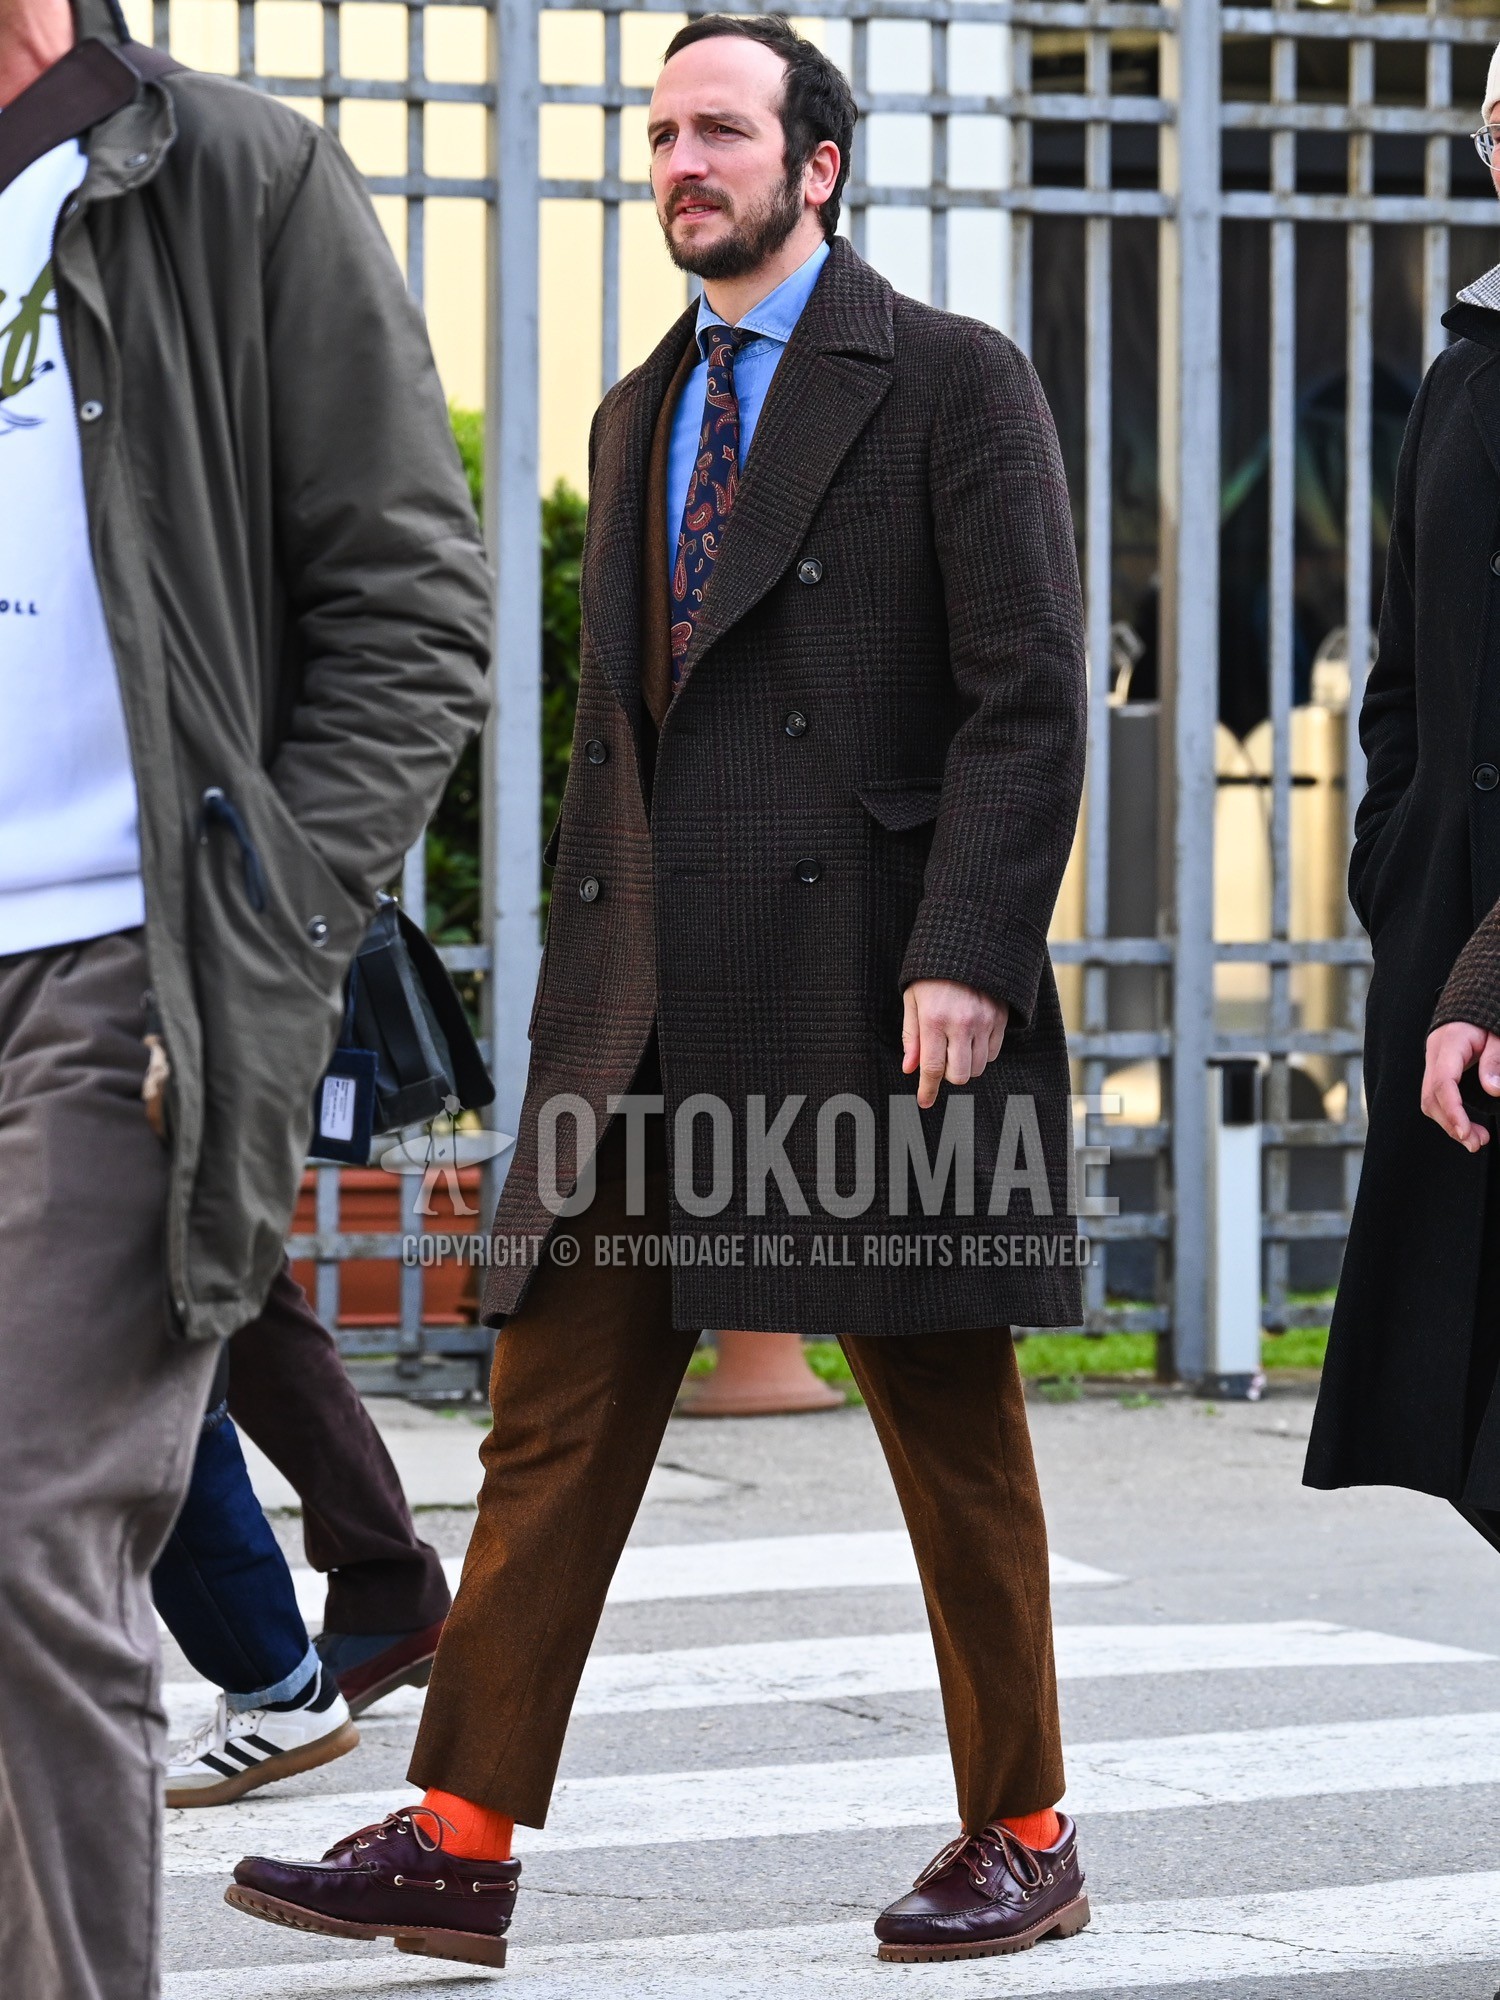 Men's autumn winter outfit with brown check ulster coat, orange plain socks, brown moccasins/deck shoes leather shoes, brown plain suit, blue graphic necktie.